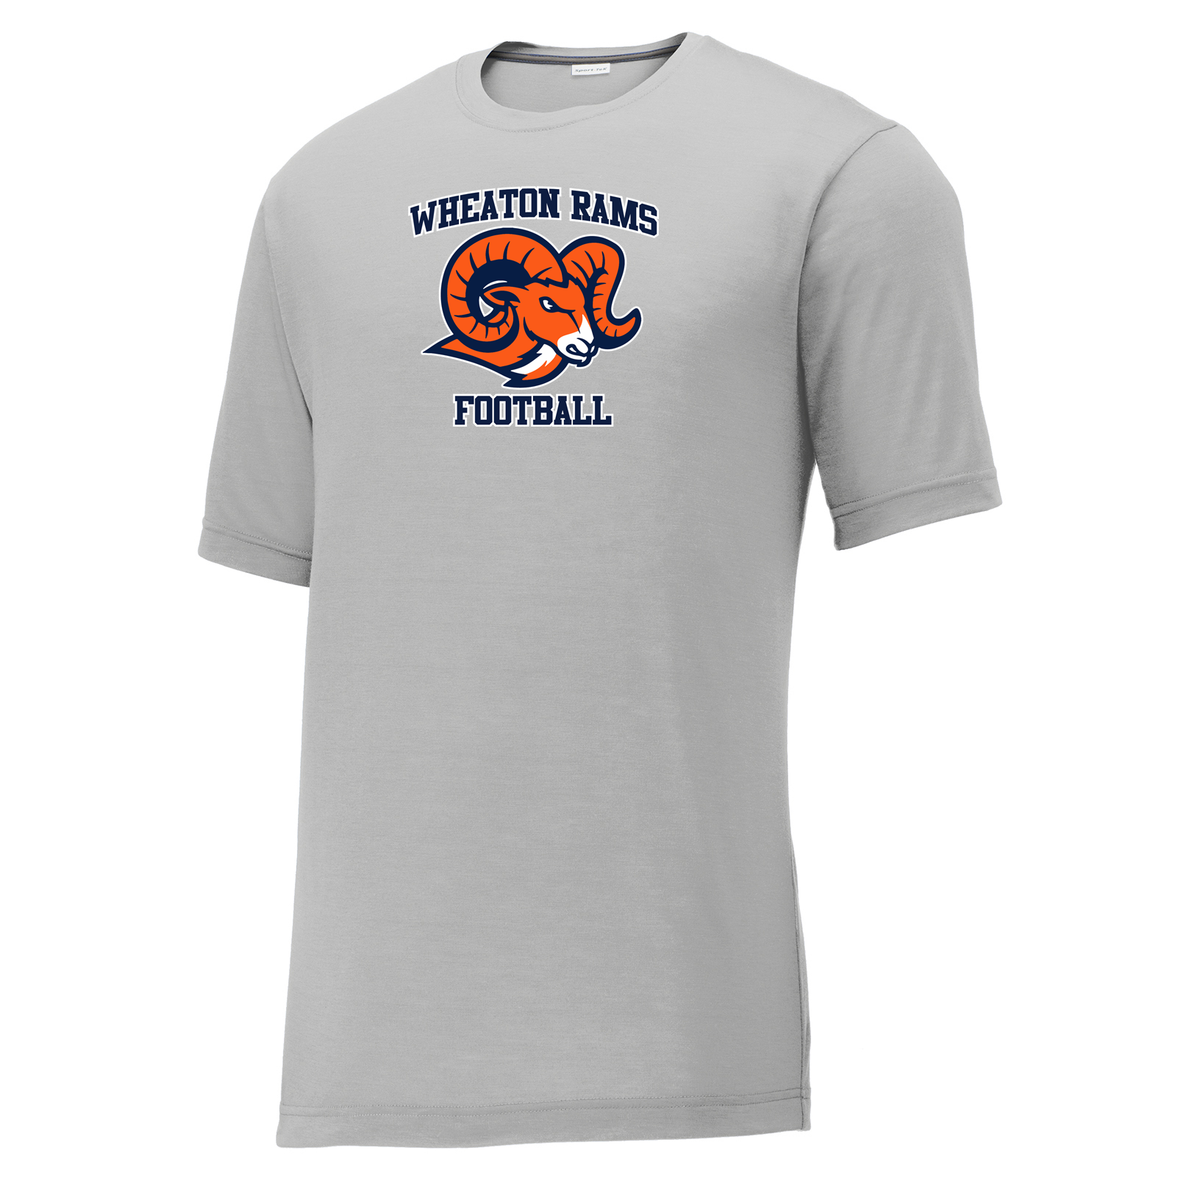 Wheaton Rams Football CottonTouch Performance T-Shirt